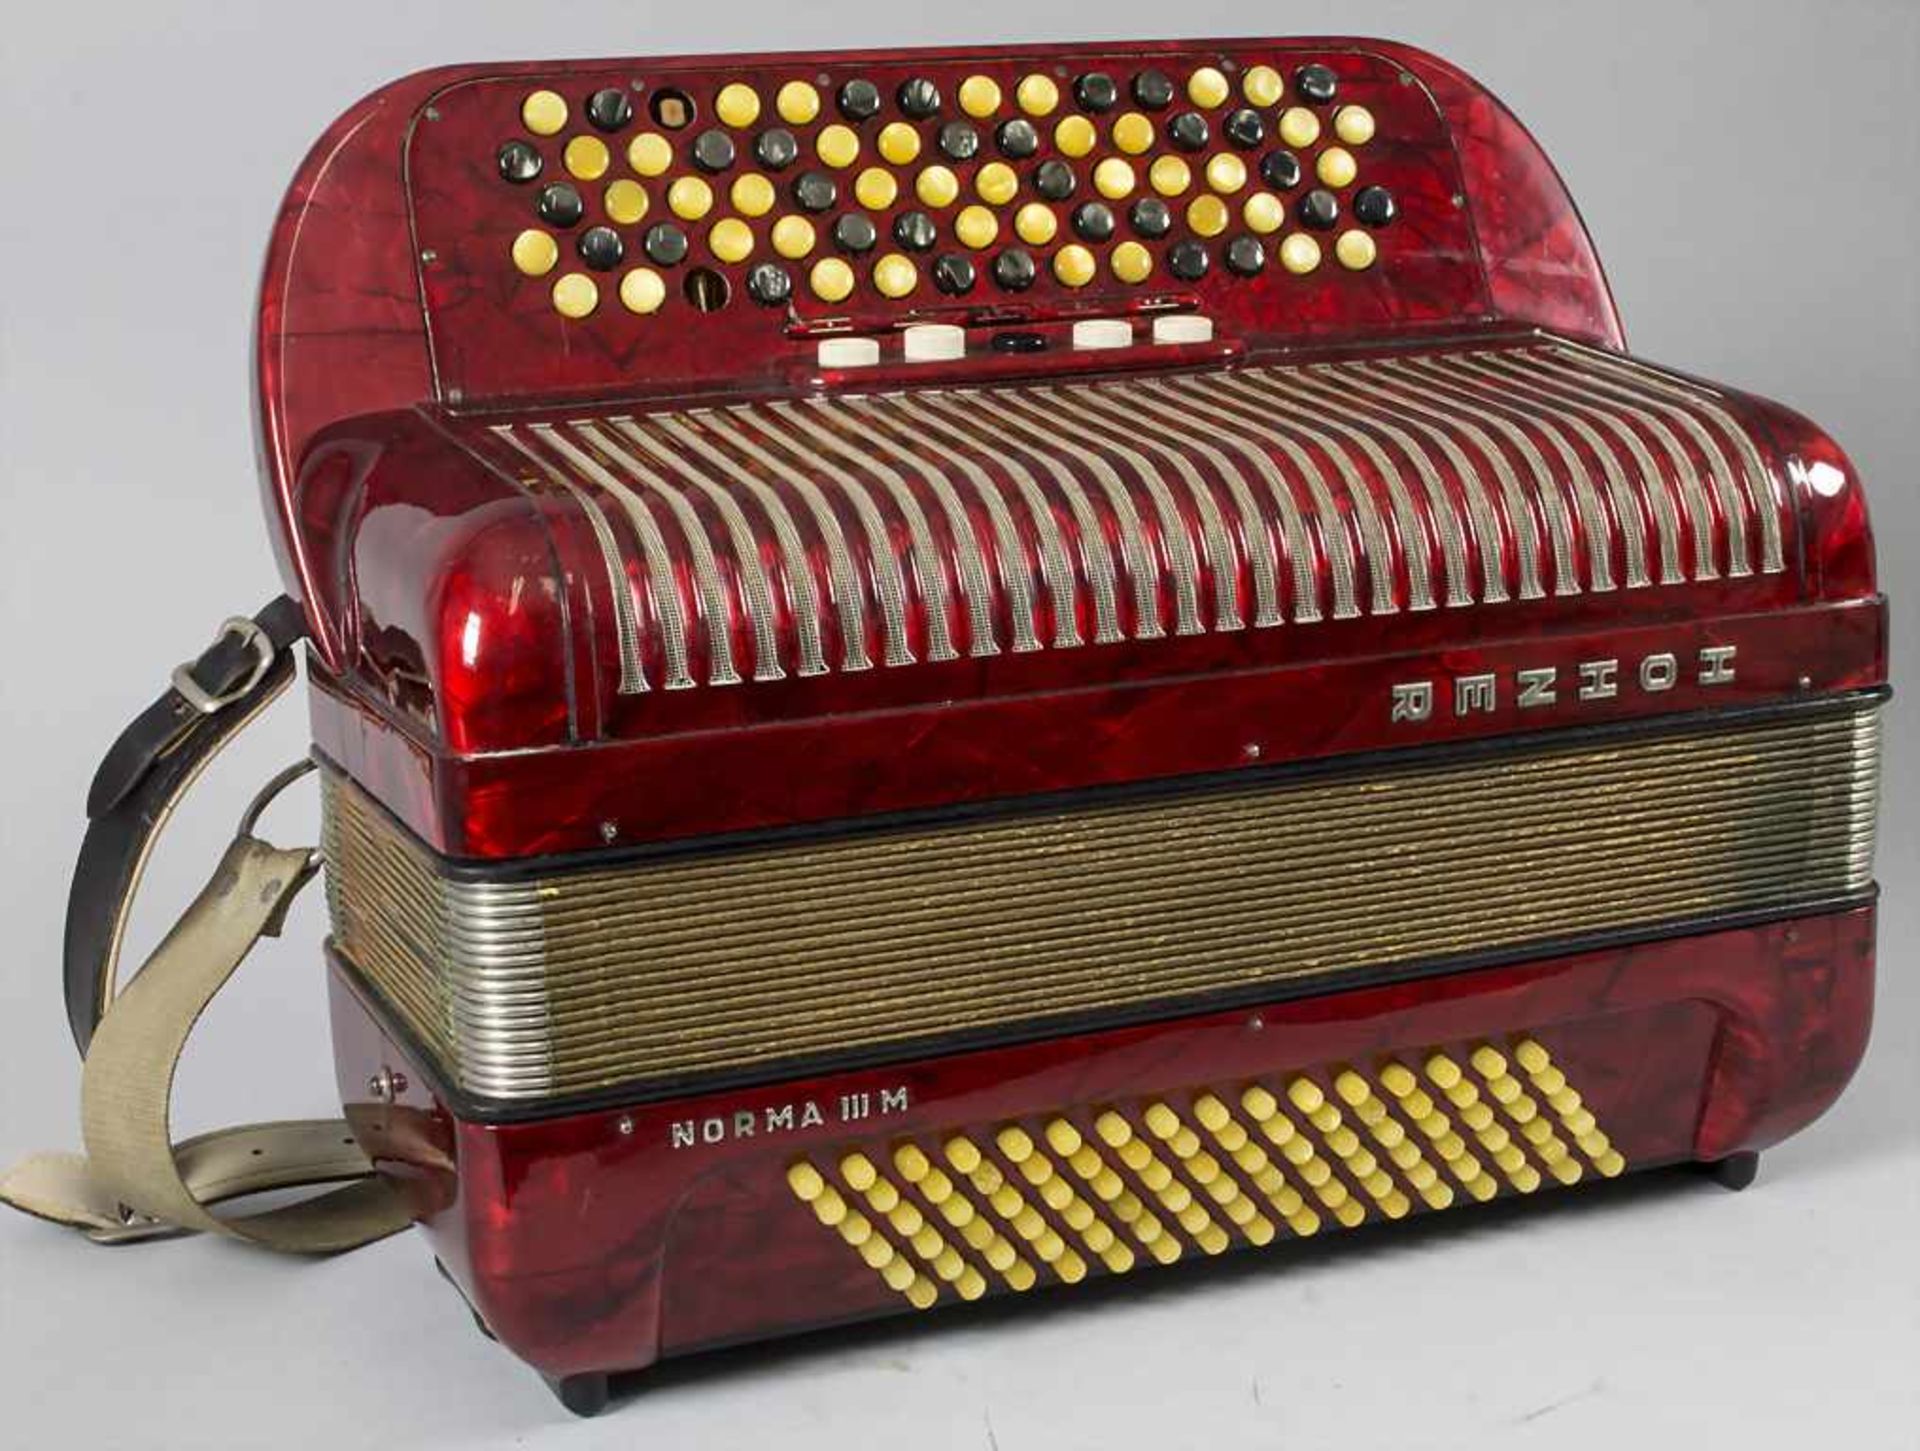 Akkordeon 'Norma III M' / An accordion 'Norma III M', HohnerBeschreibung: rot marmorie